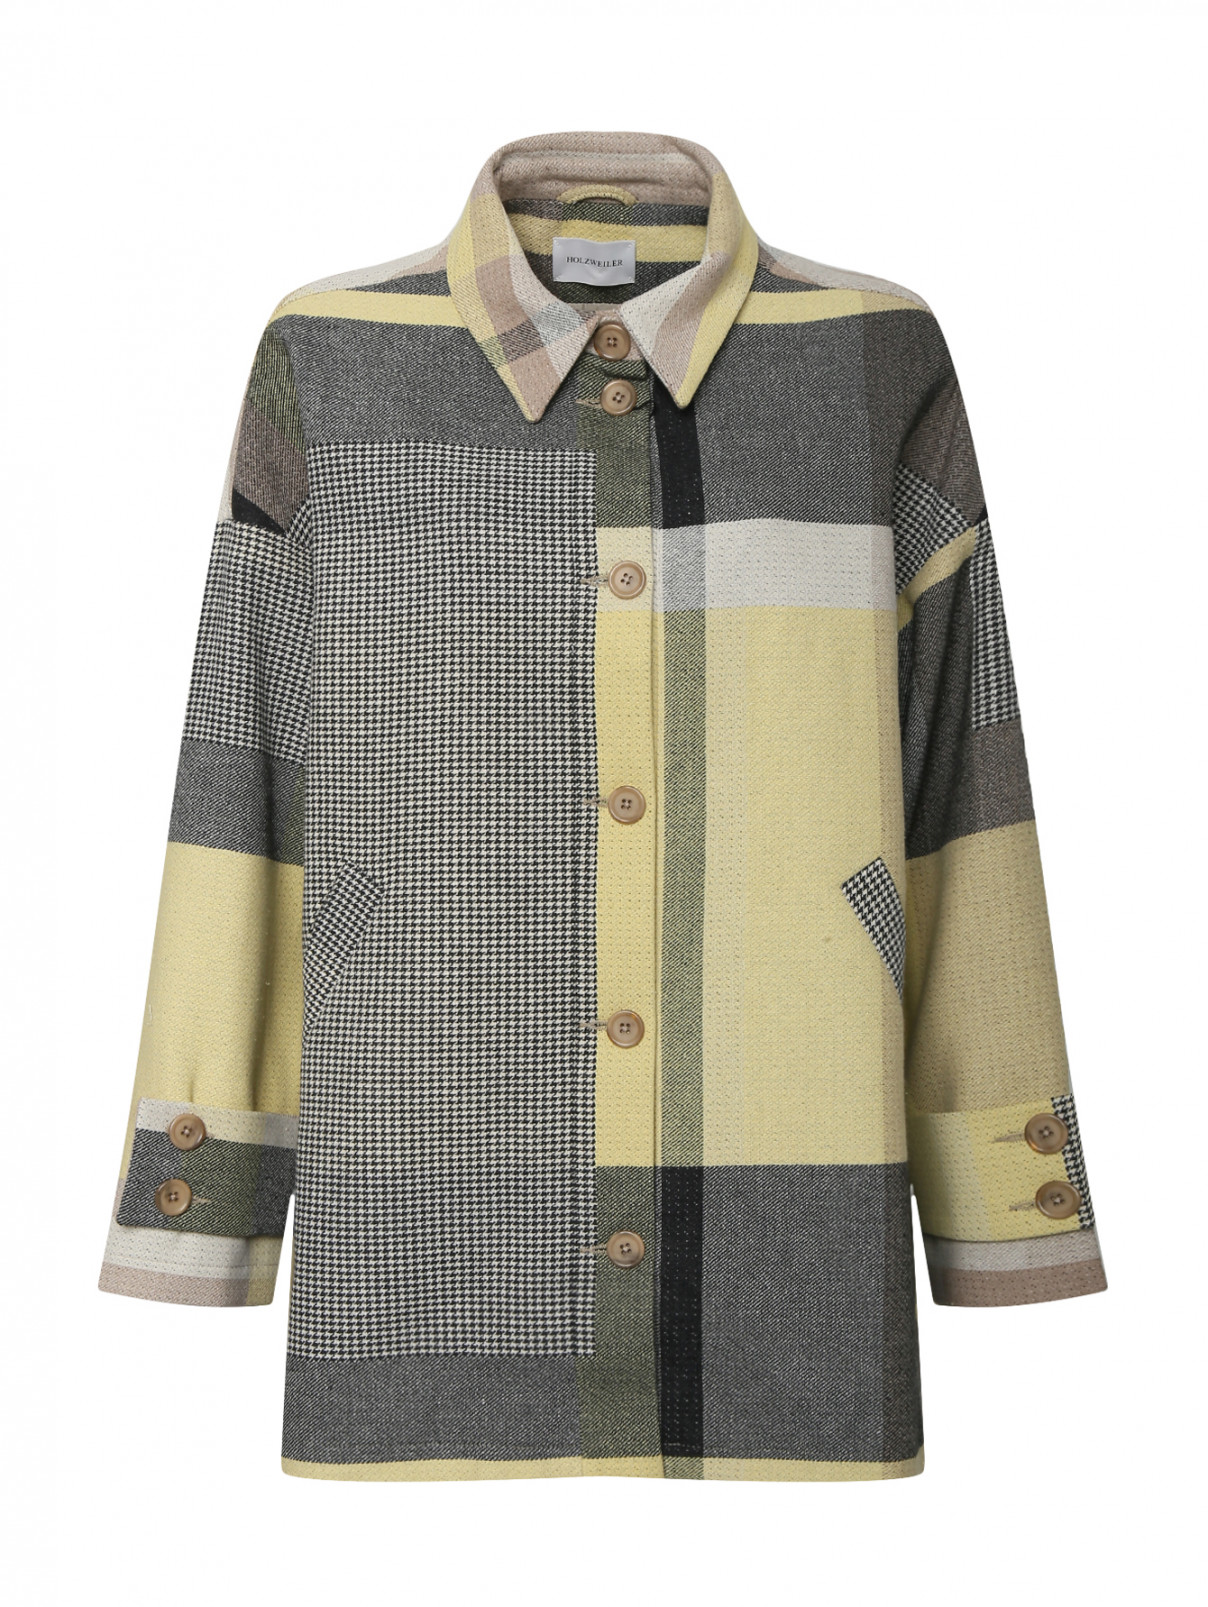 Куртка-рубашка из хлопка Holzweiler  –  Общий вид  – Цвет:  Желтый